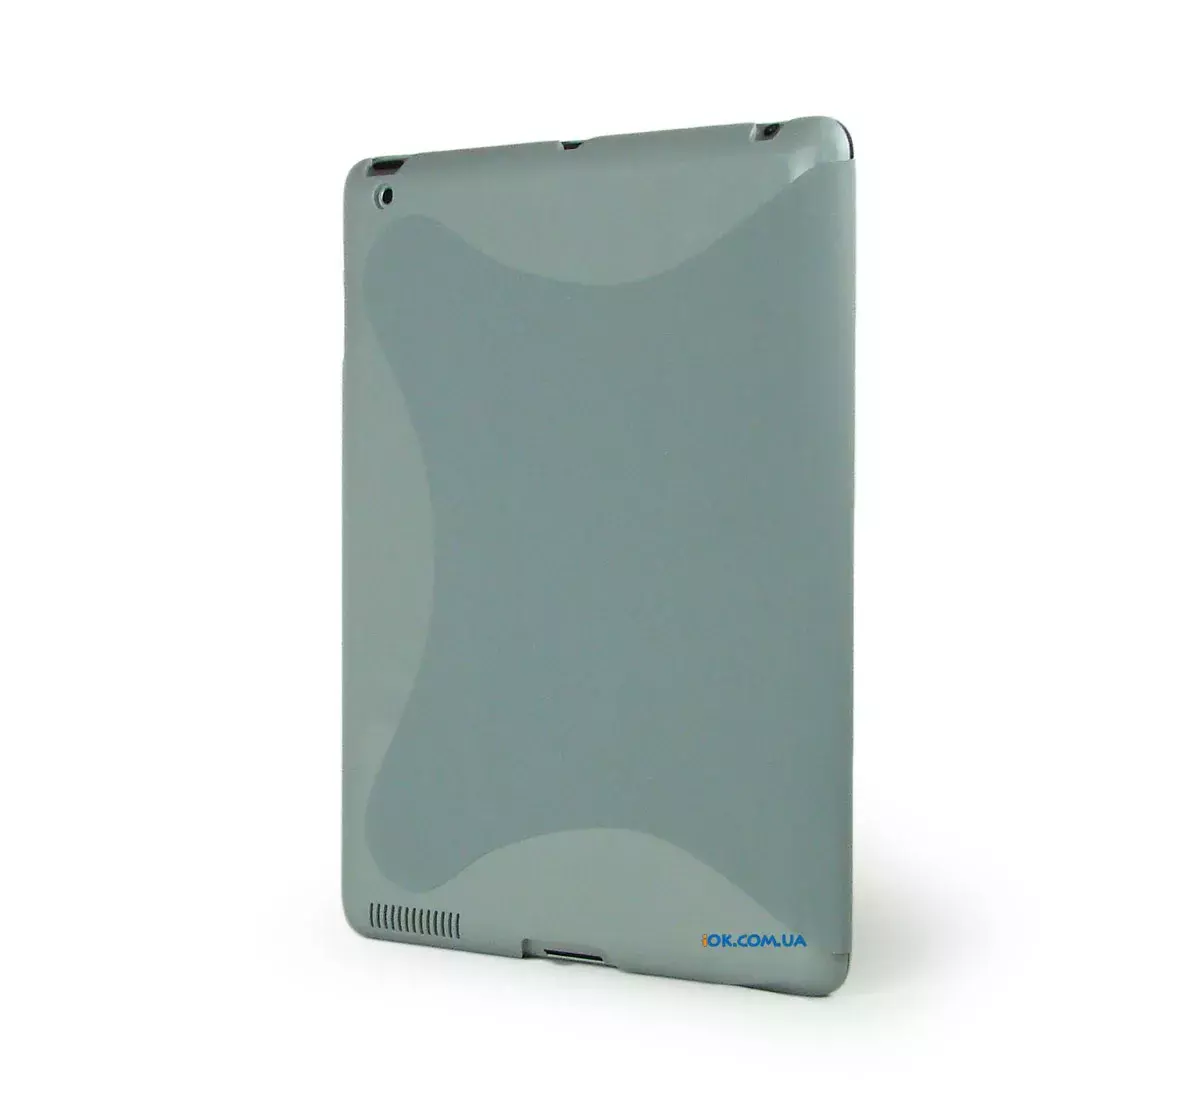 Чехол + SmartCover для iPad 2/3/4 - серый